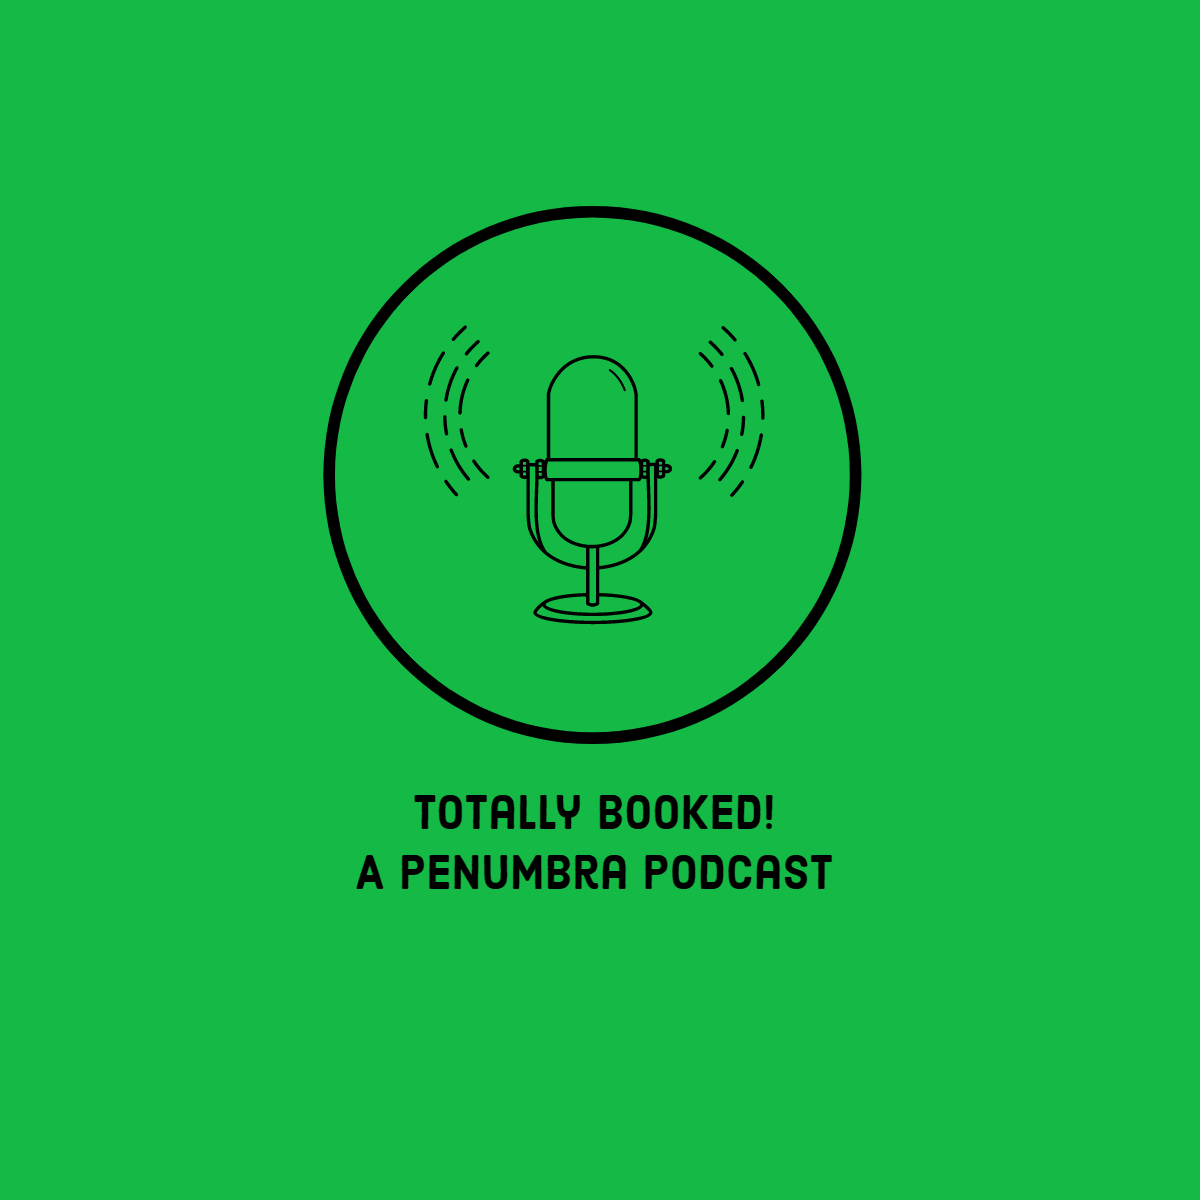 Penumbra Online Podcast icon